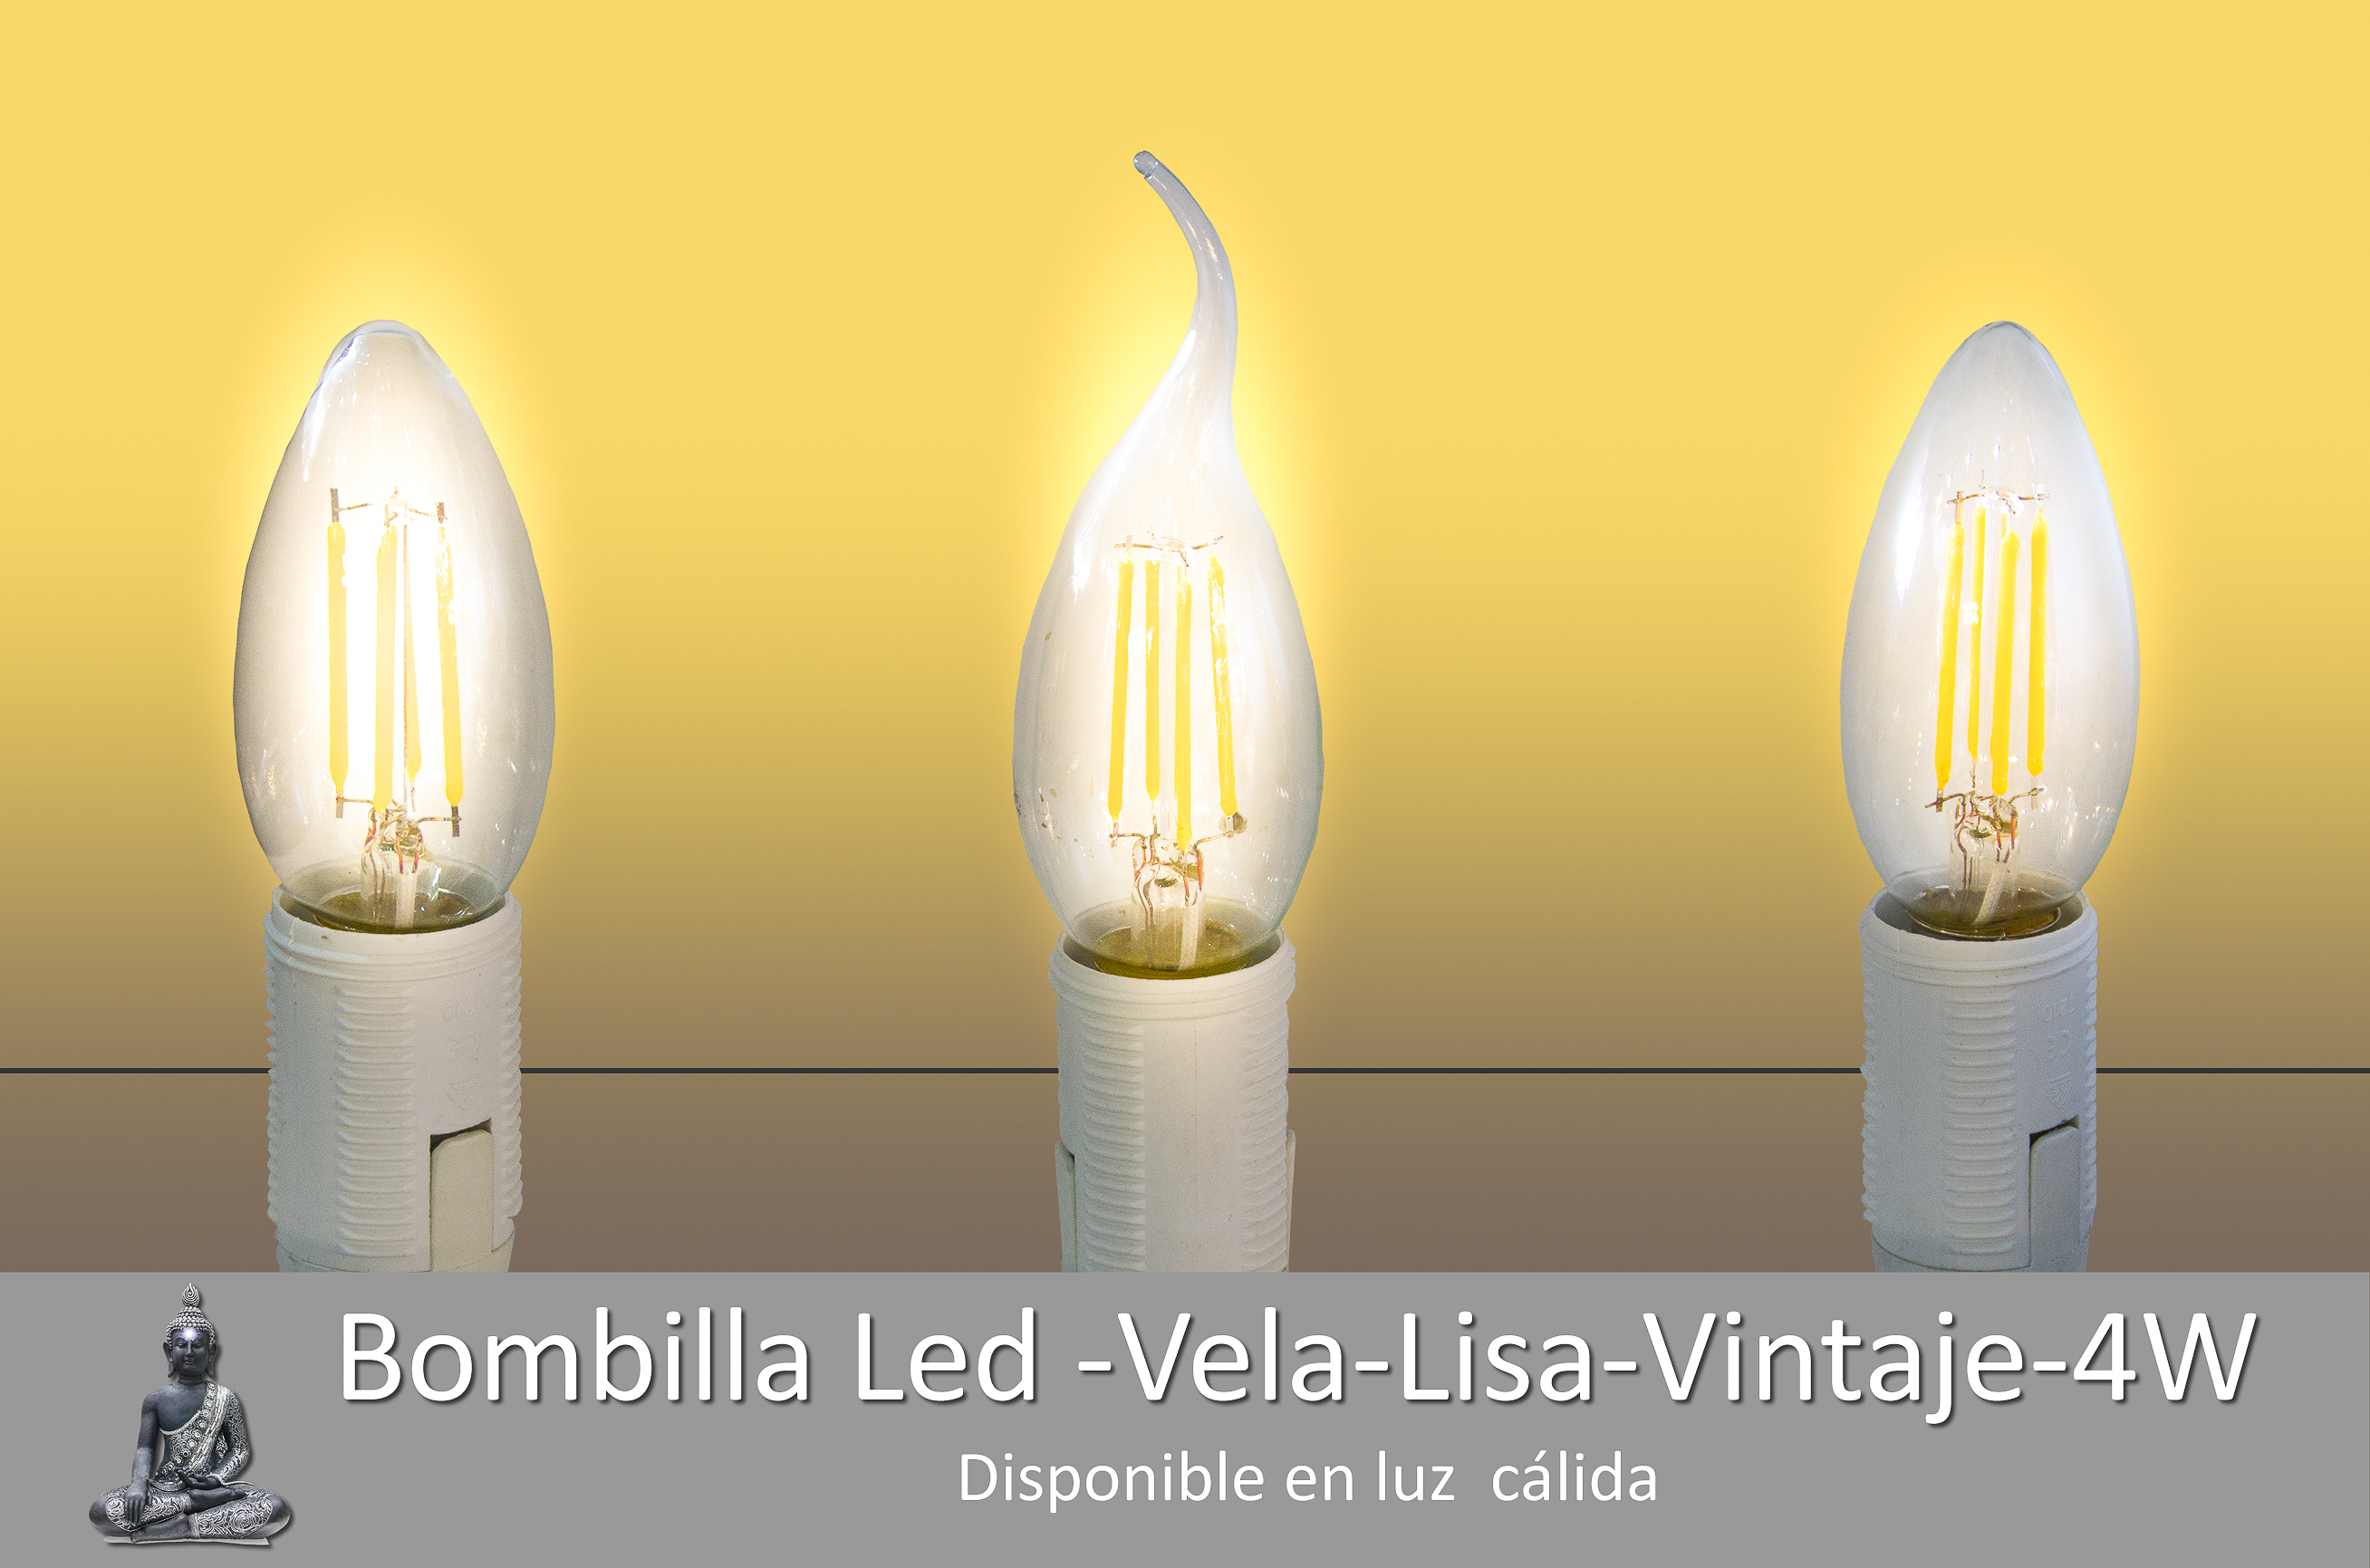 Bombilla Led Vela Lisa Vintage - 4W de luz fría